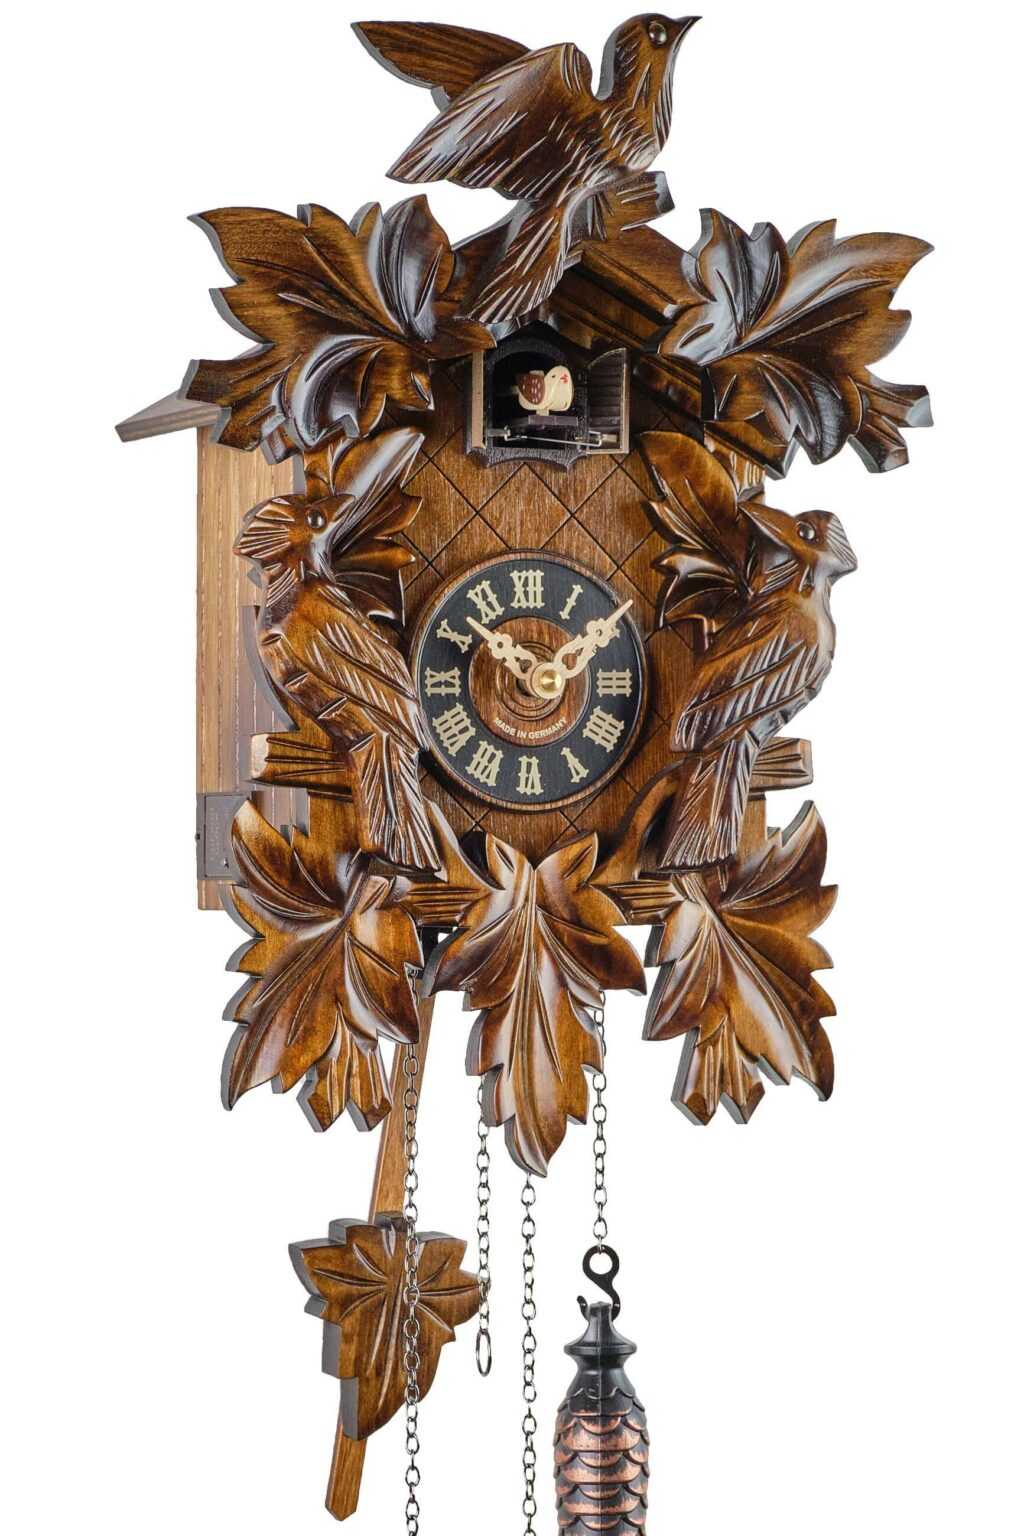 Engstler -Kuckucksuhr Quarz Uhrwerk Motiv Dreivogel 35cm- 632 Q